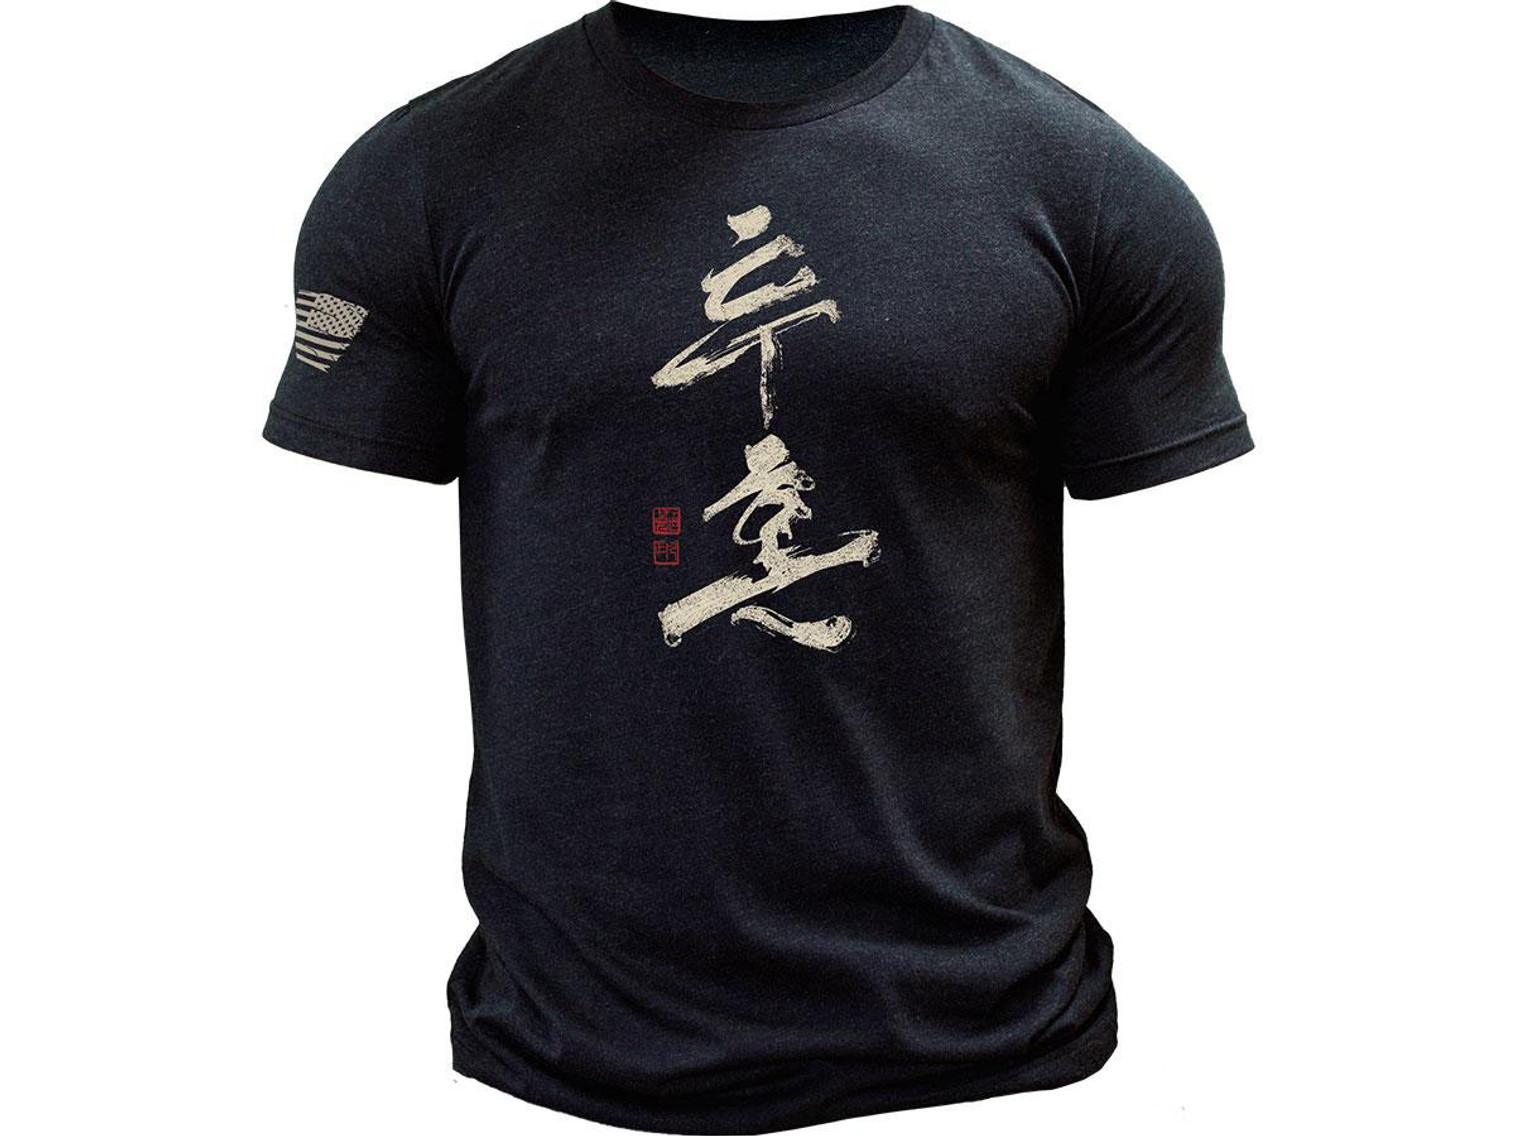 MUSA "Fighting Spirit" Shirt (Color: Black / Large)